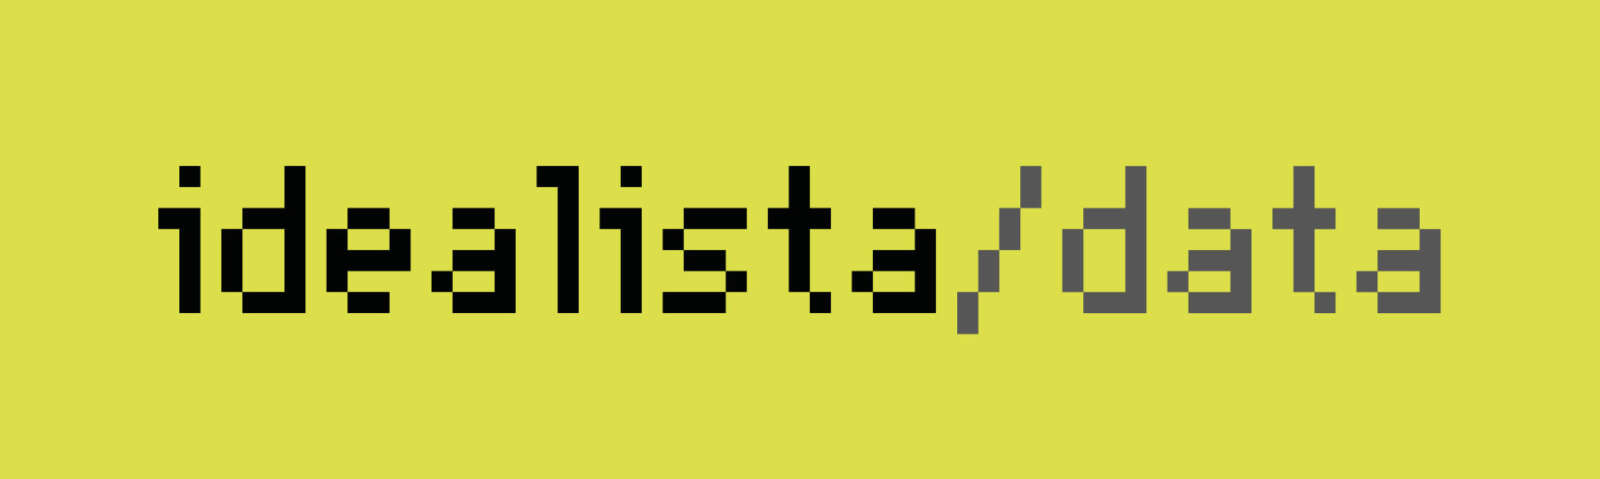 idealista/data